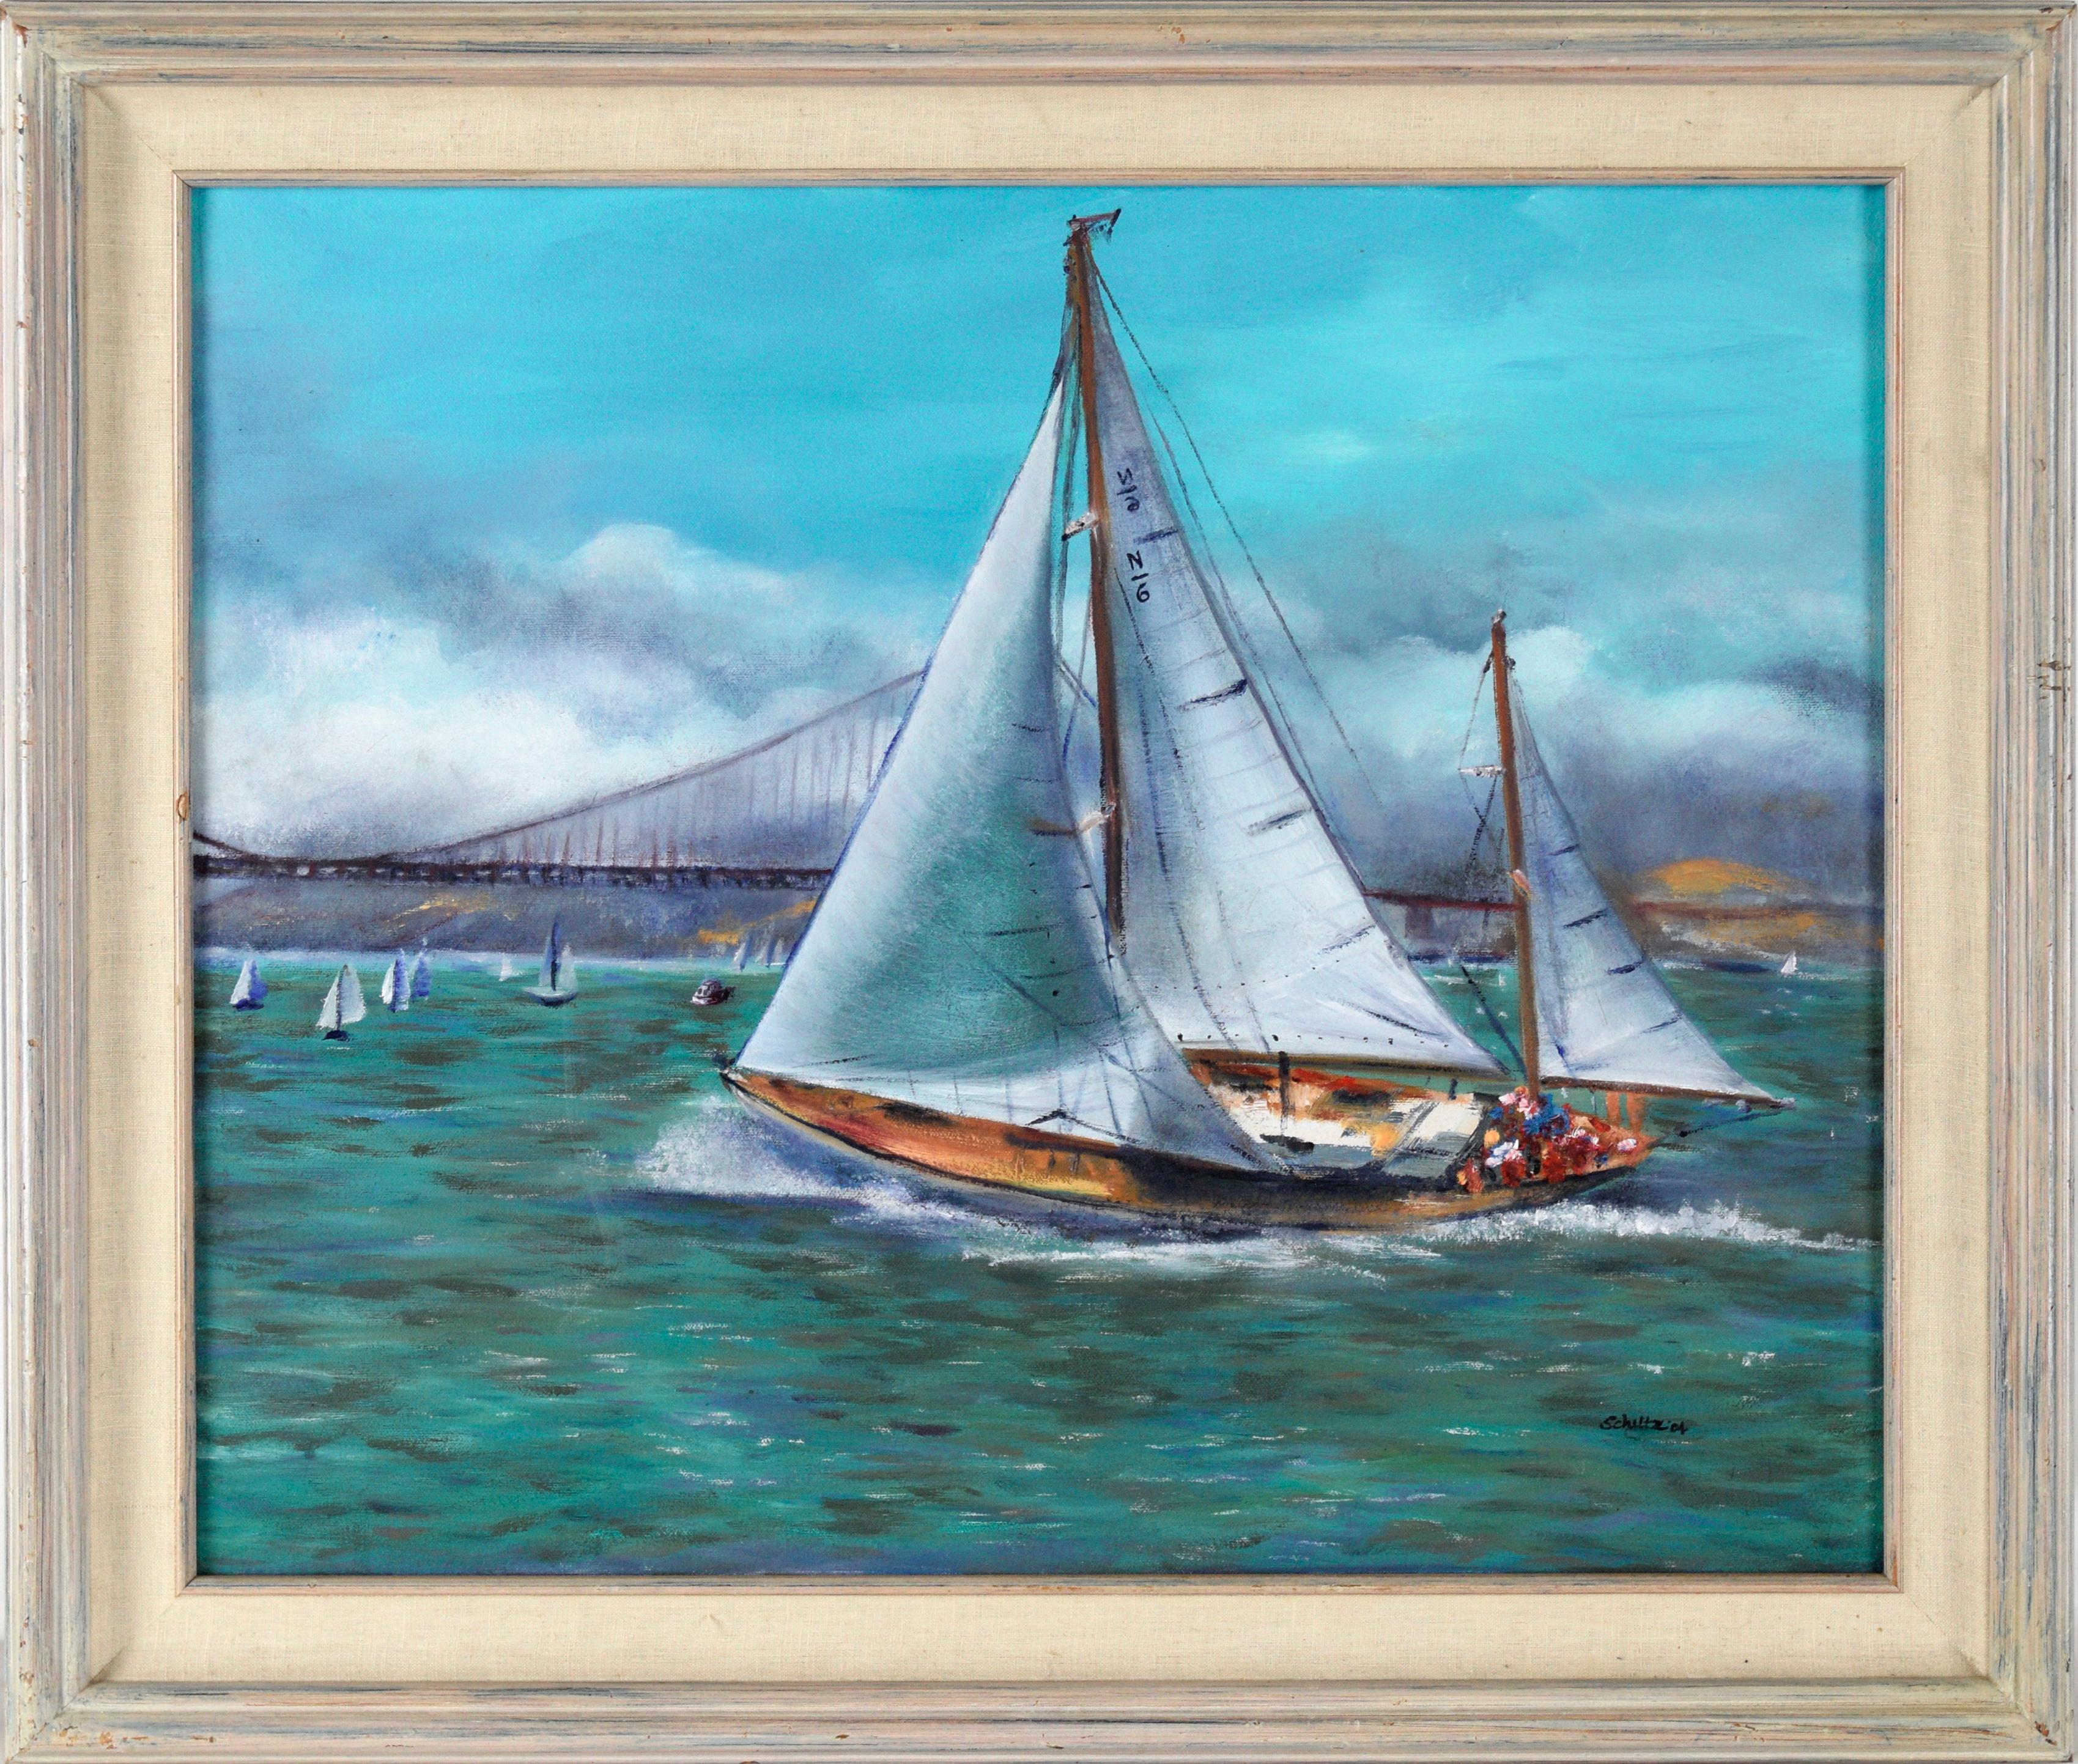 Unknown Figurative Painting - Sailing Regatta Under the Golden Gate Bridge - Seascape in Oil on Canvas